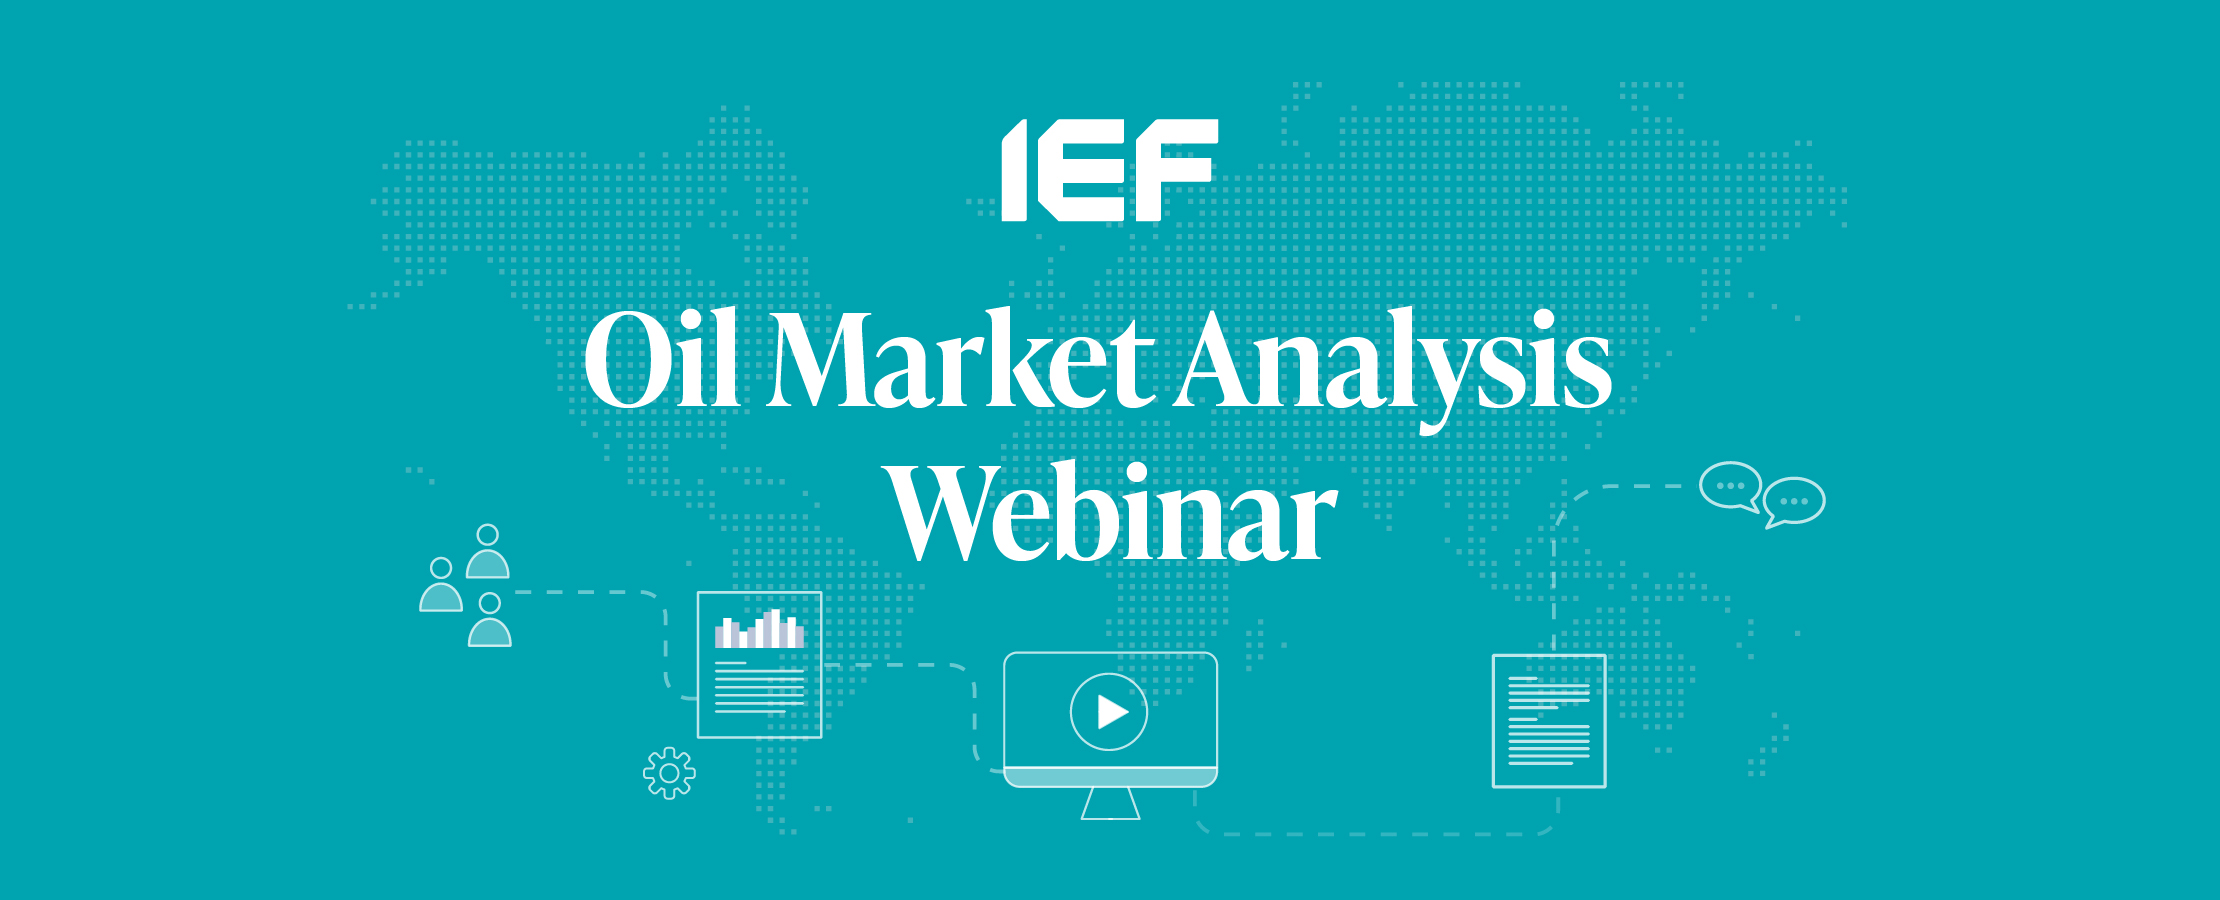 Oil Market Analysis Webinar Web